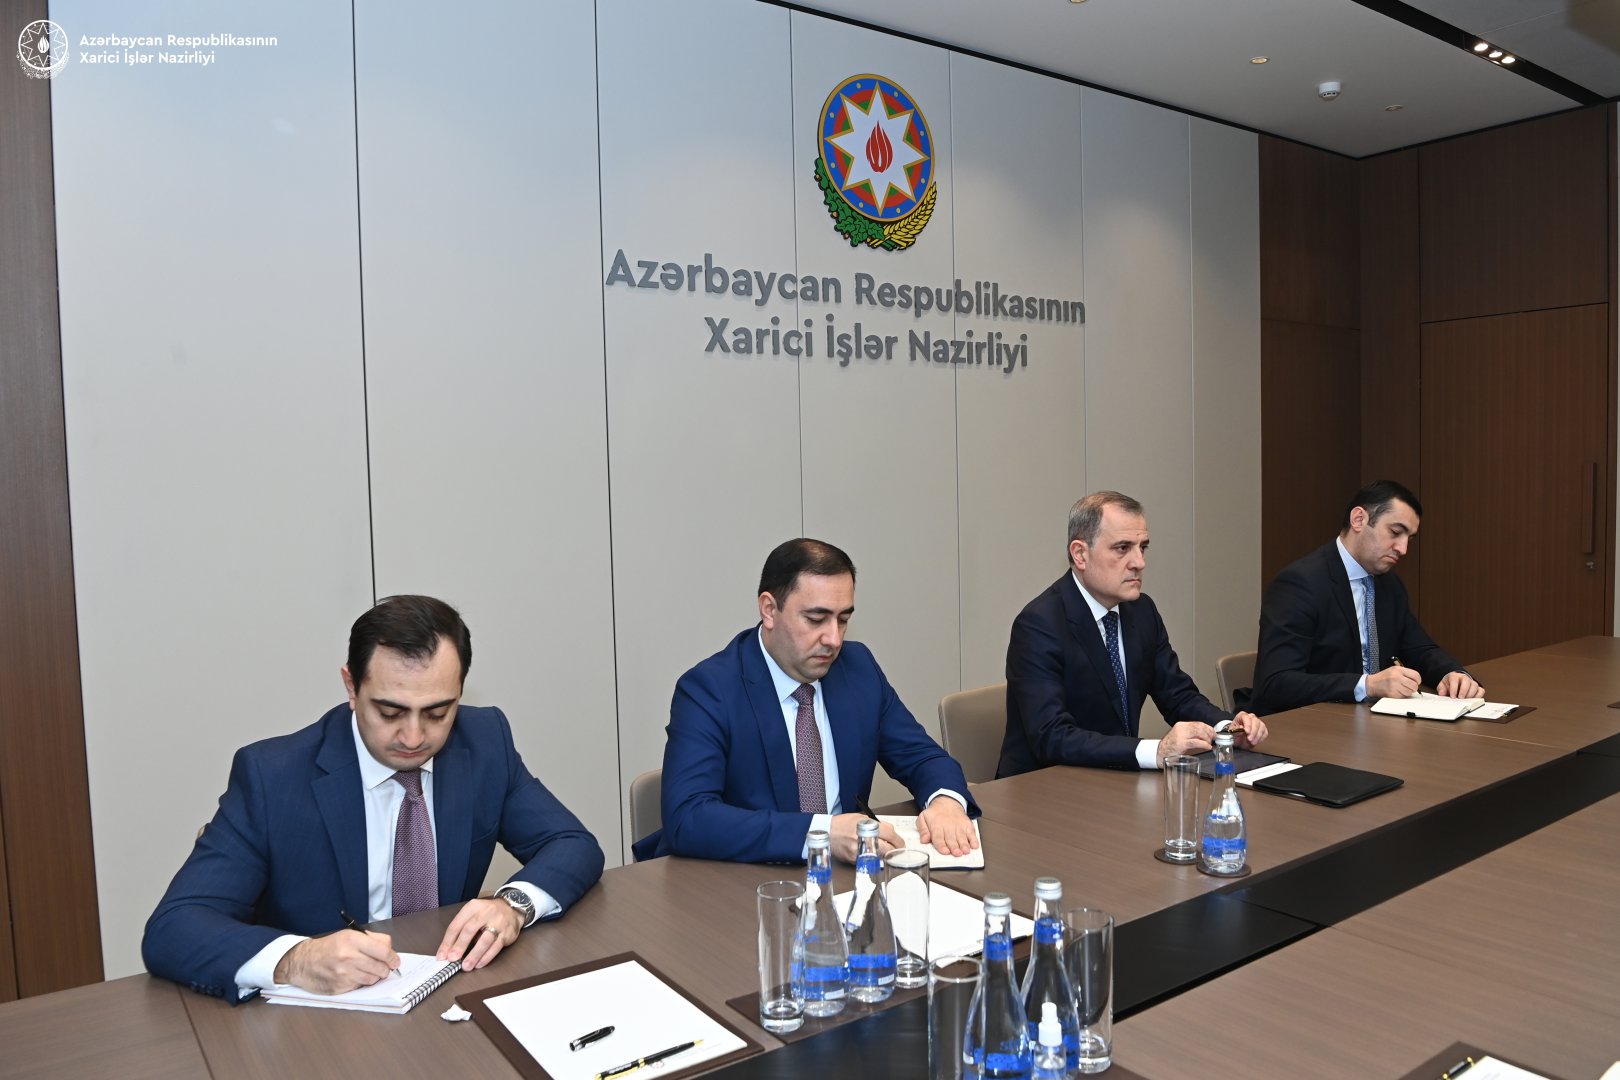 Azerbaijan submits remarks on draft peace agreement to Armenia - FM